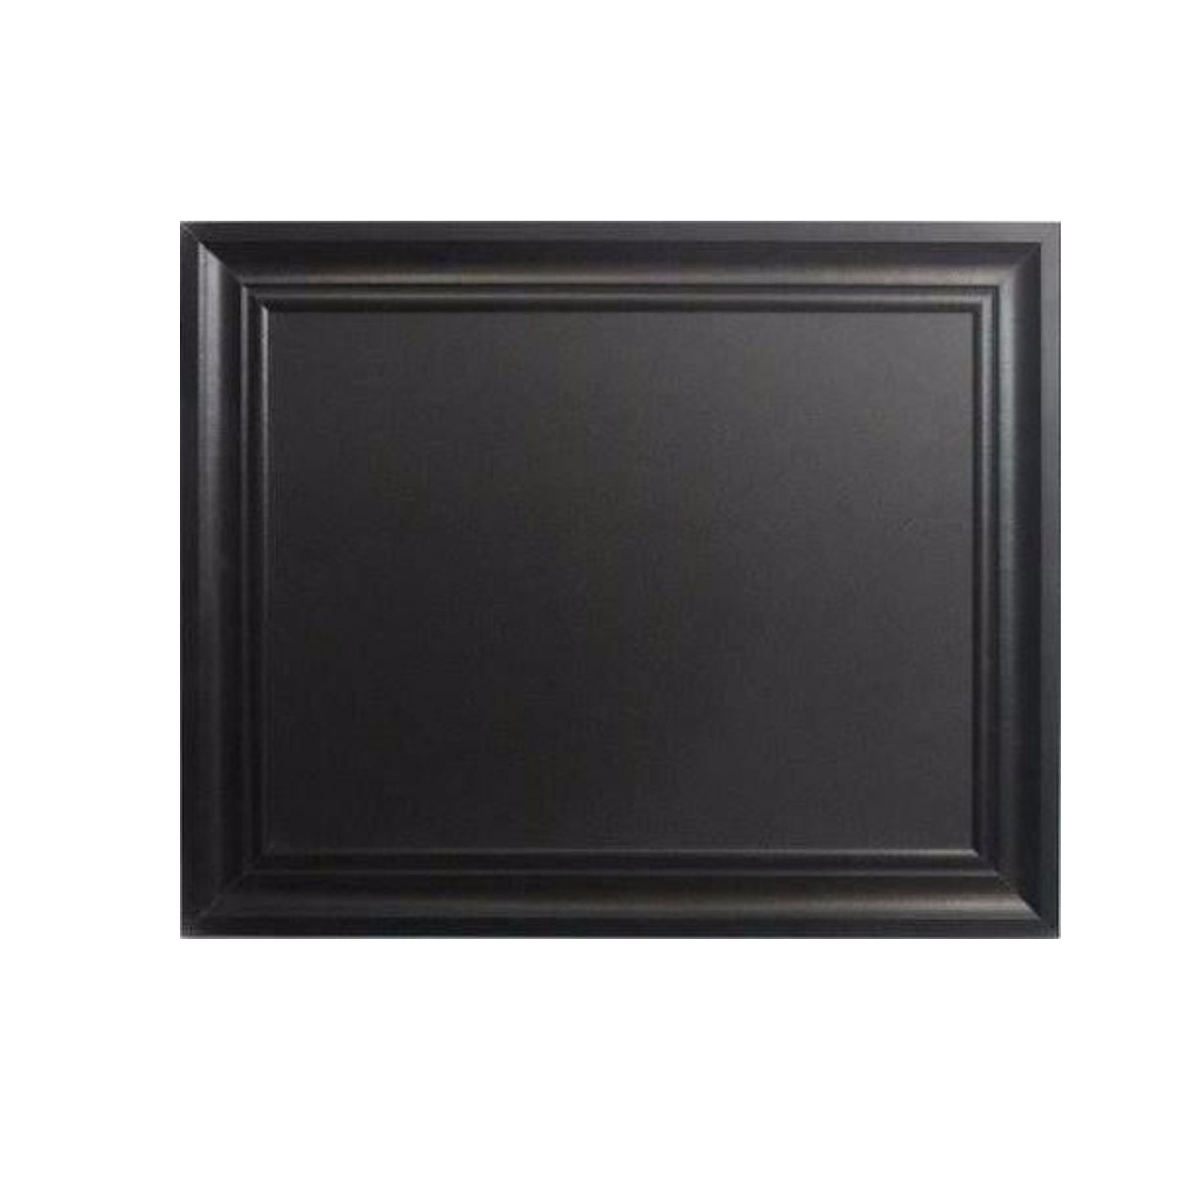 352150 Rectangular Wooden Chalkboard With Beveled Edge Frame, Black